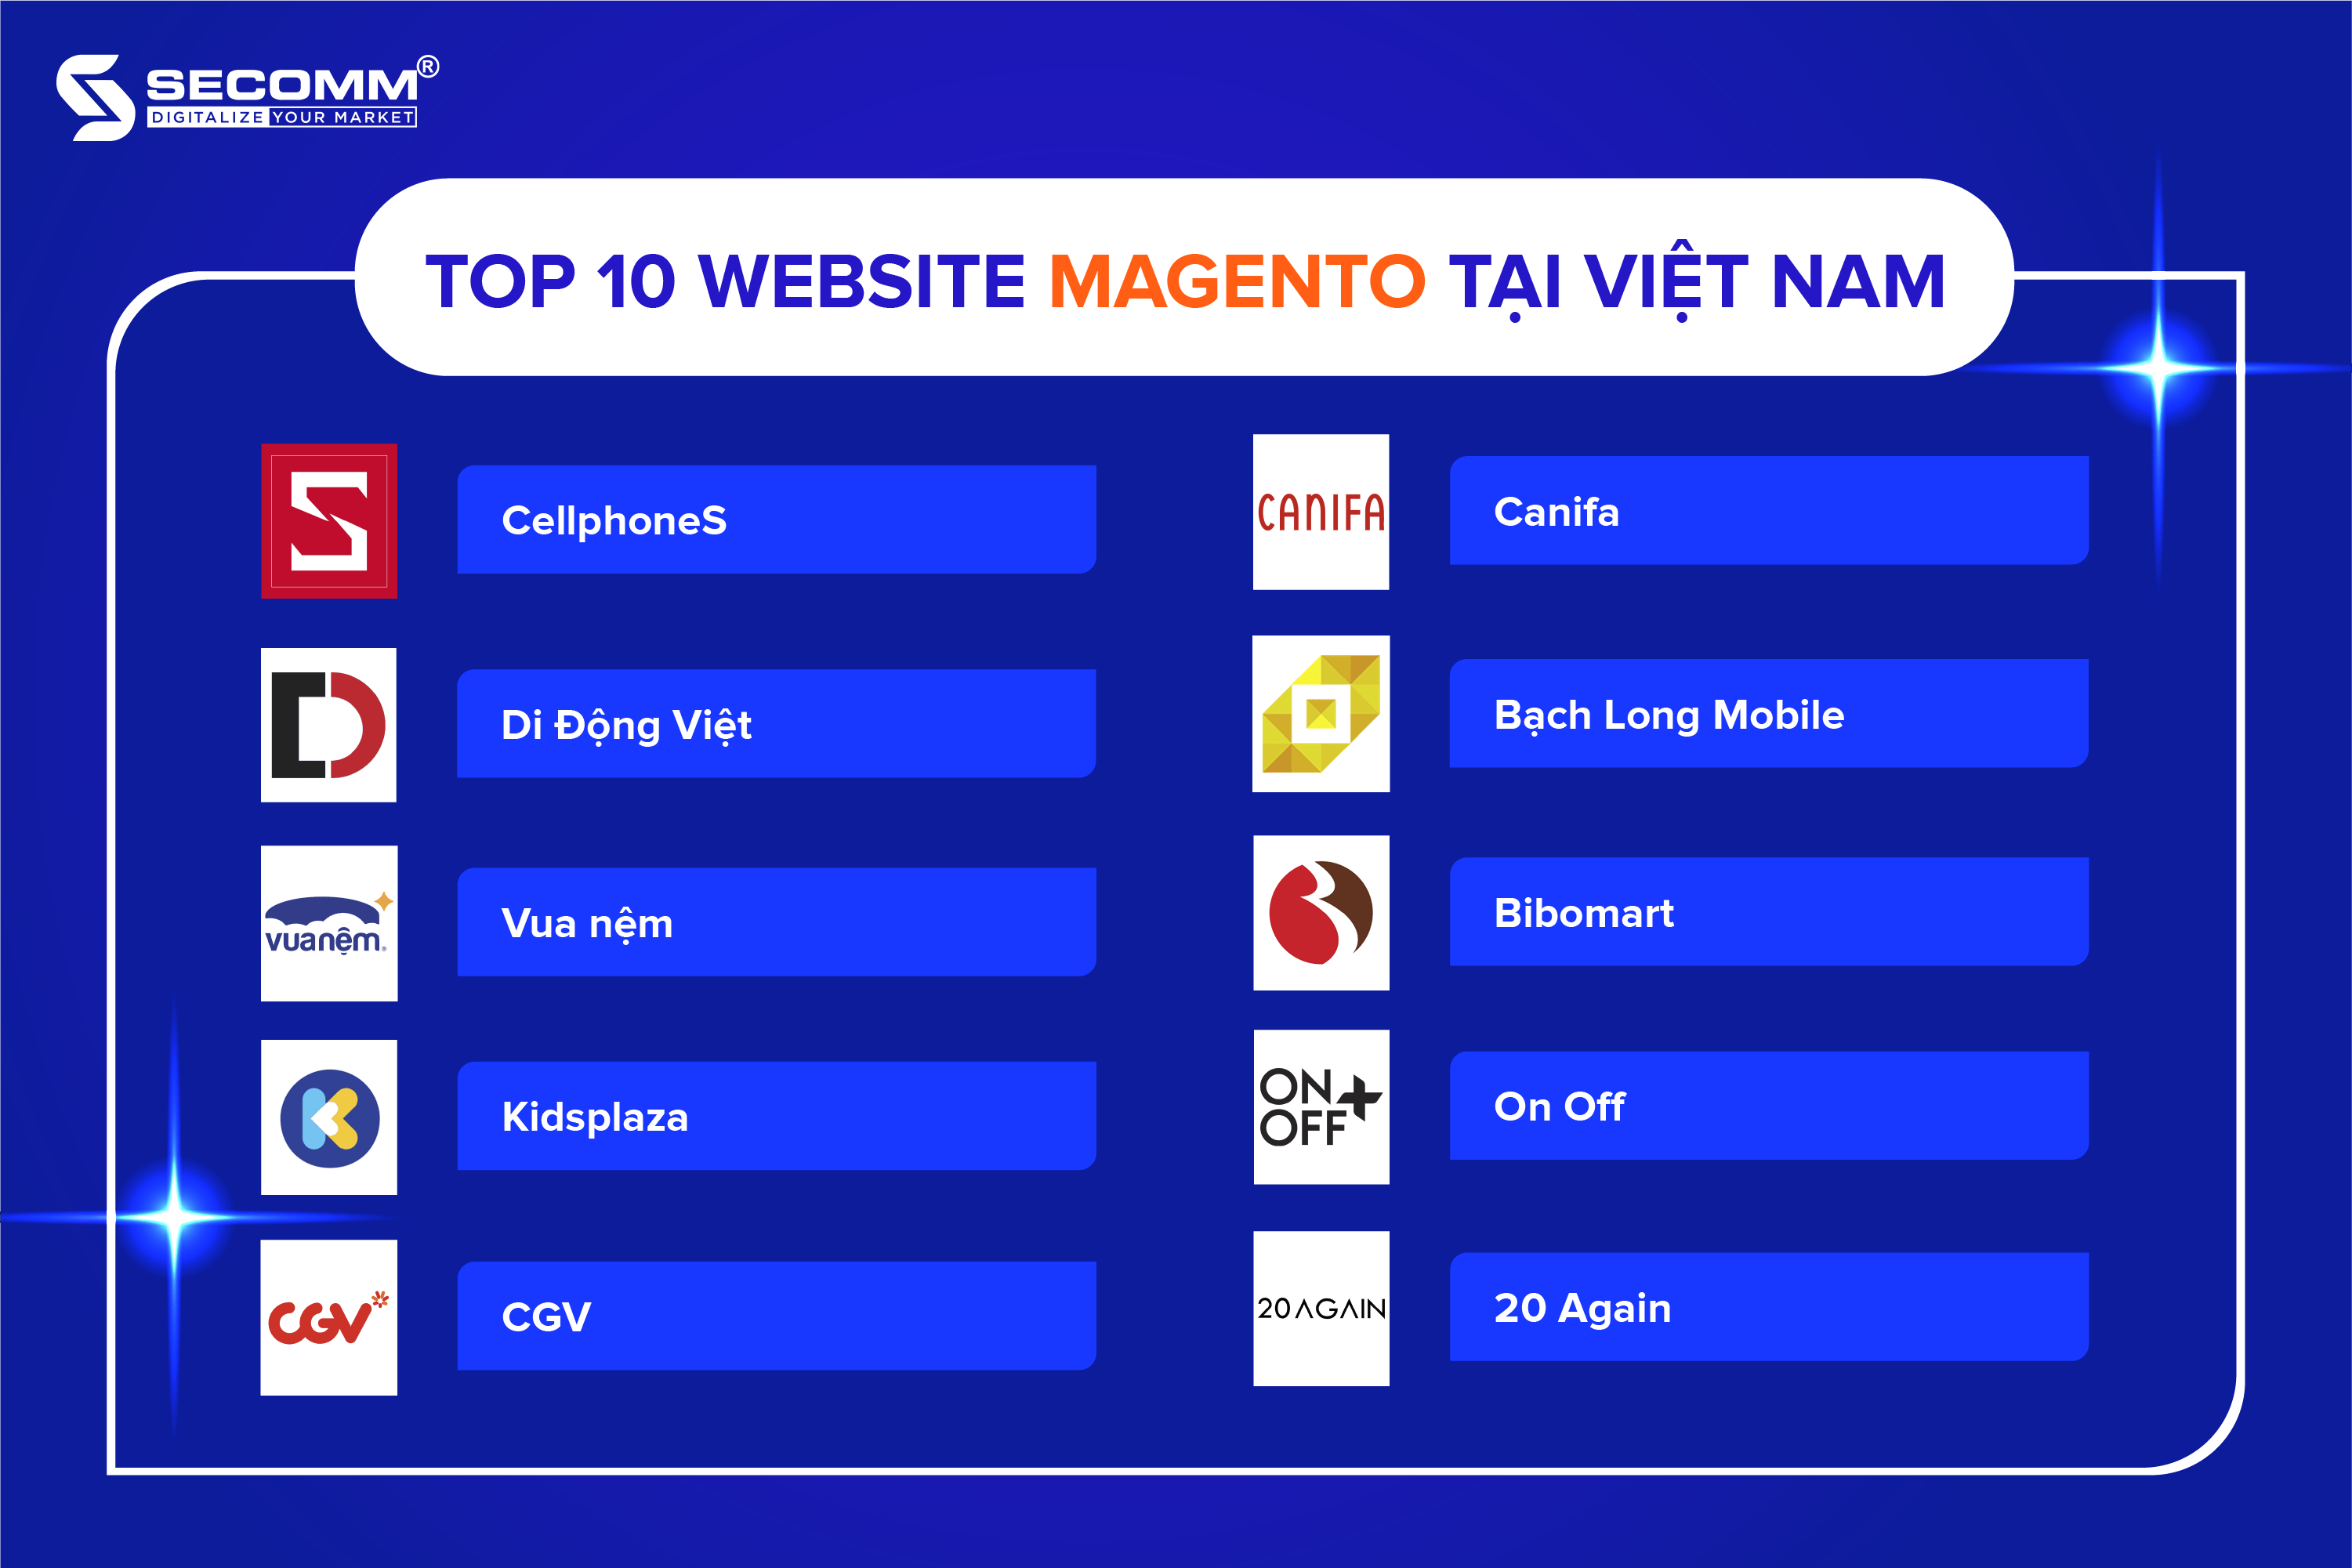 Top 10 website Magento tai Viet Nam